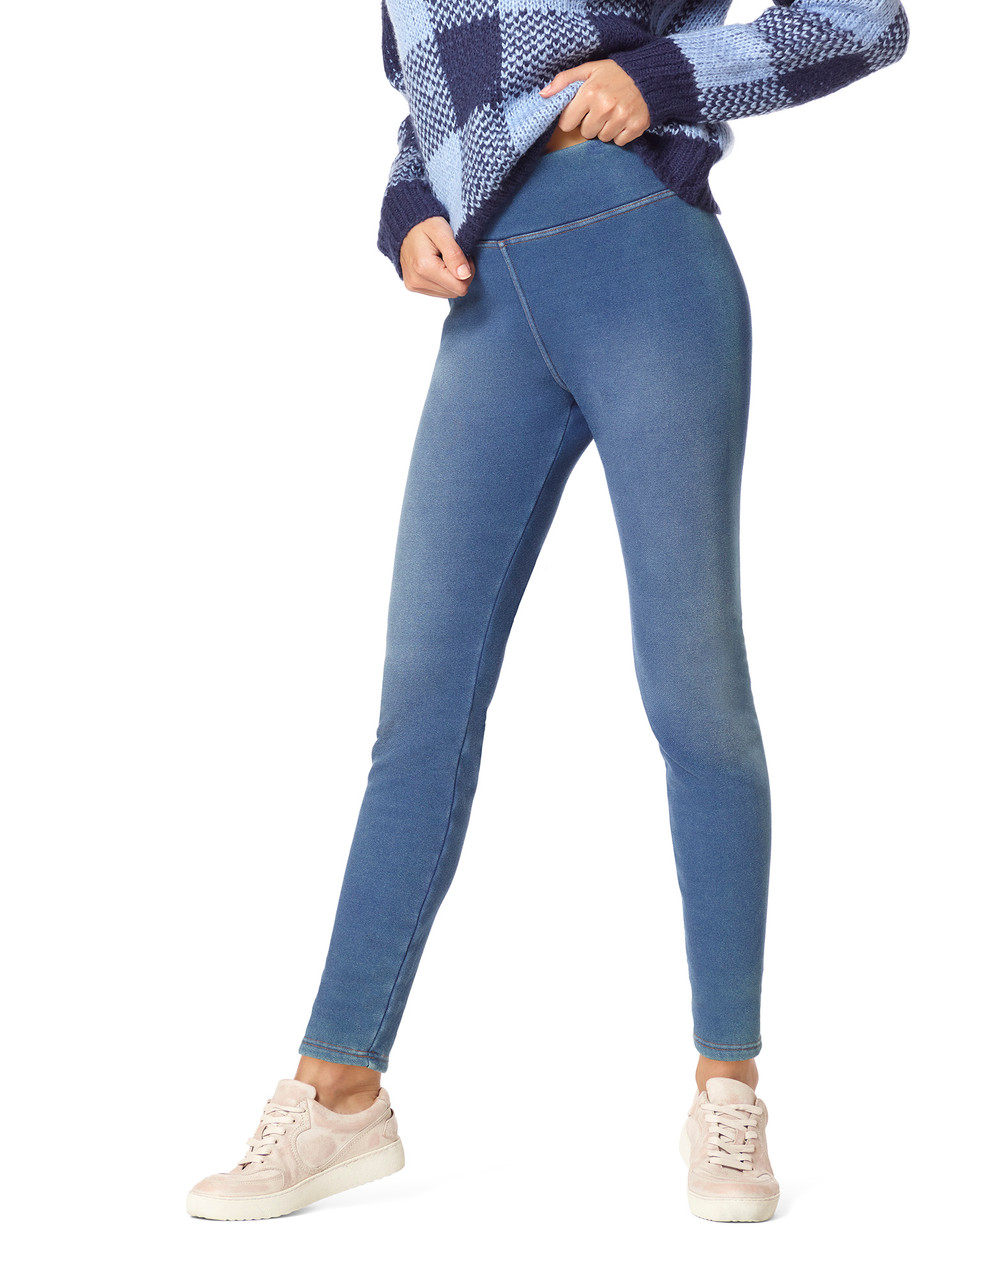 HUE Women's Ultra Soft Fleece Lined Denim Leggings Hosiery, Medium